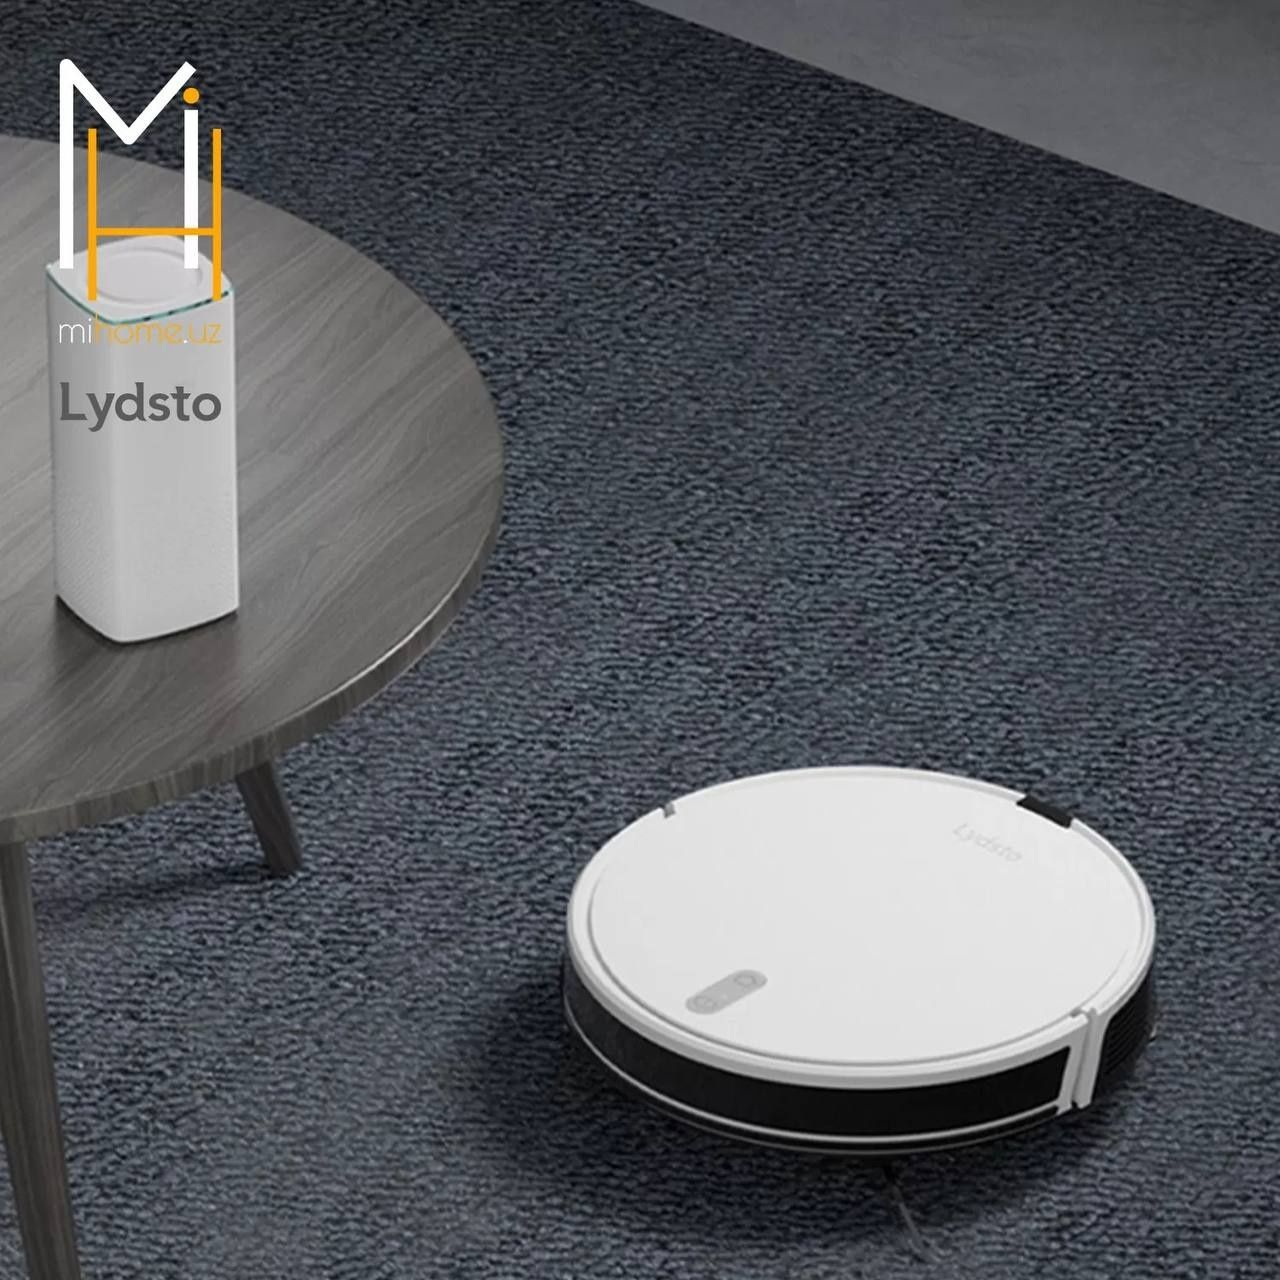 Робот-пылесос Xiaomi Lydsto Vacuum Cleaner G2